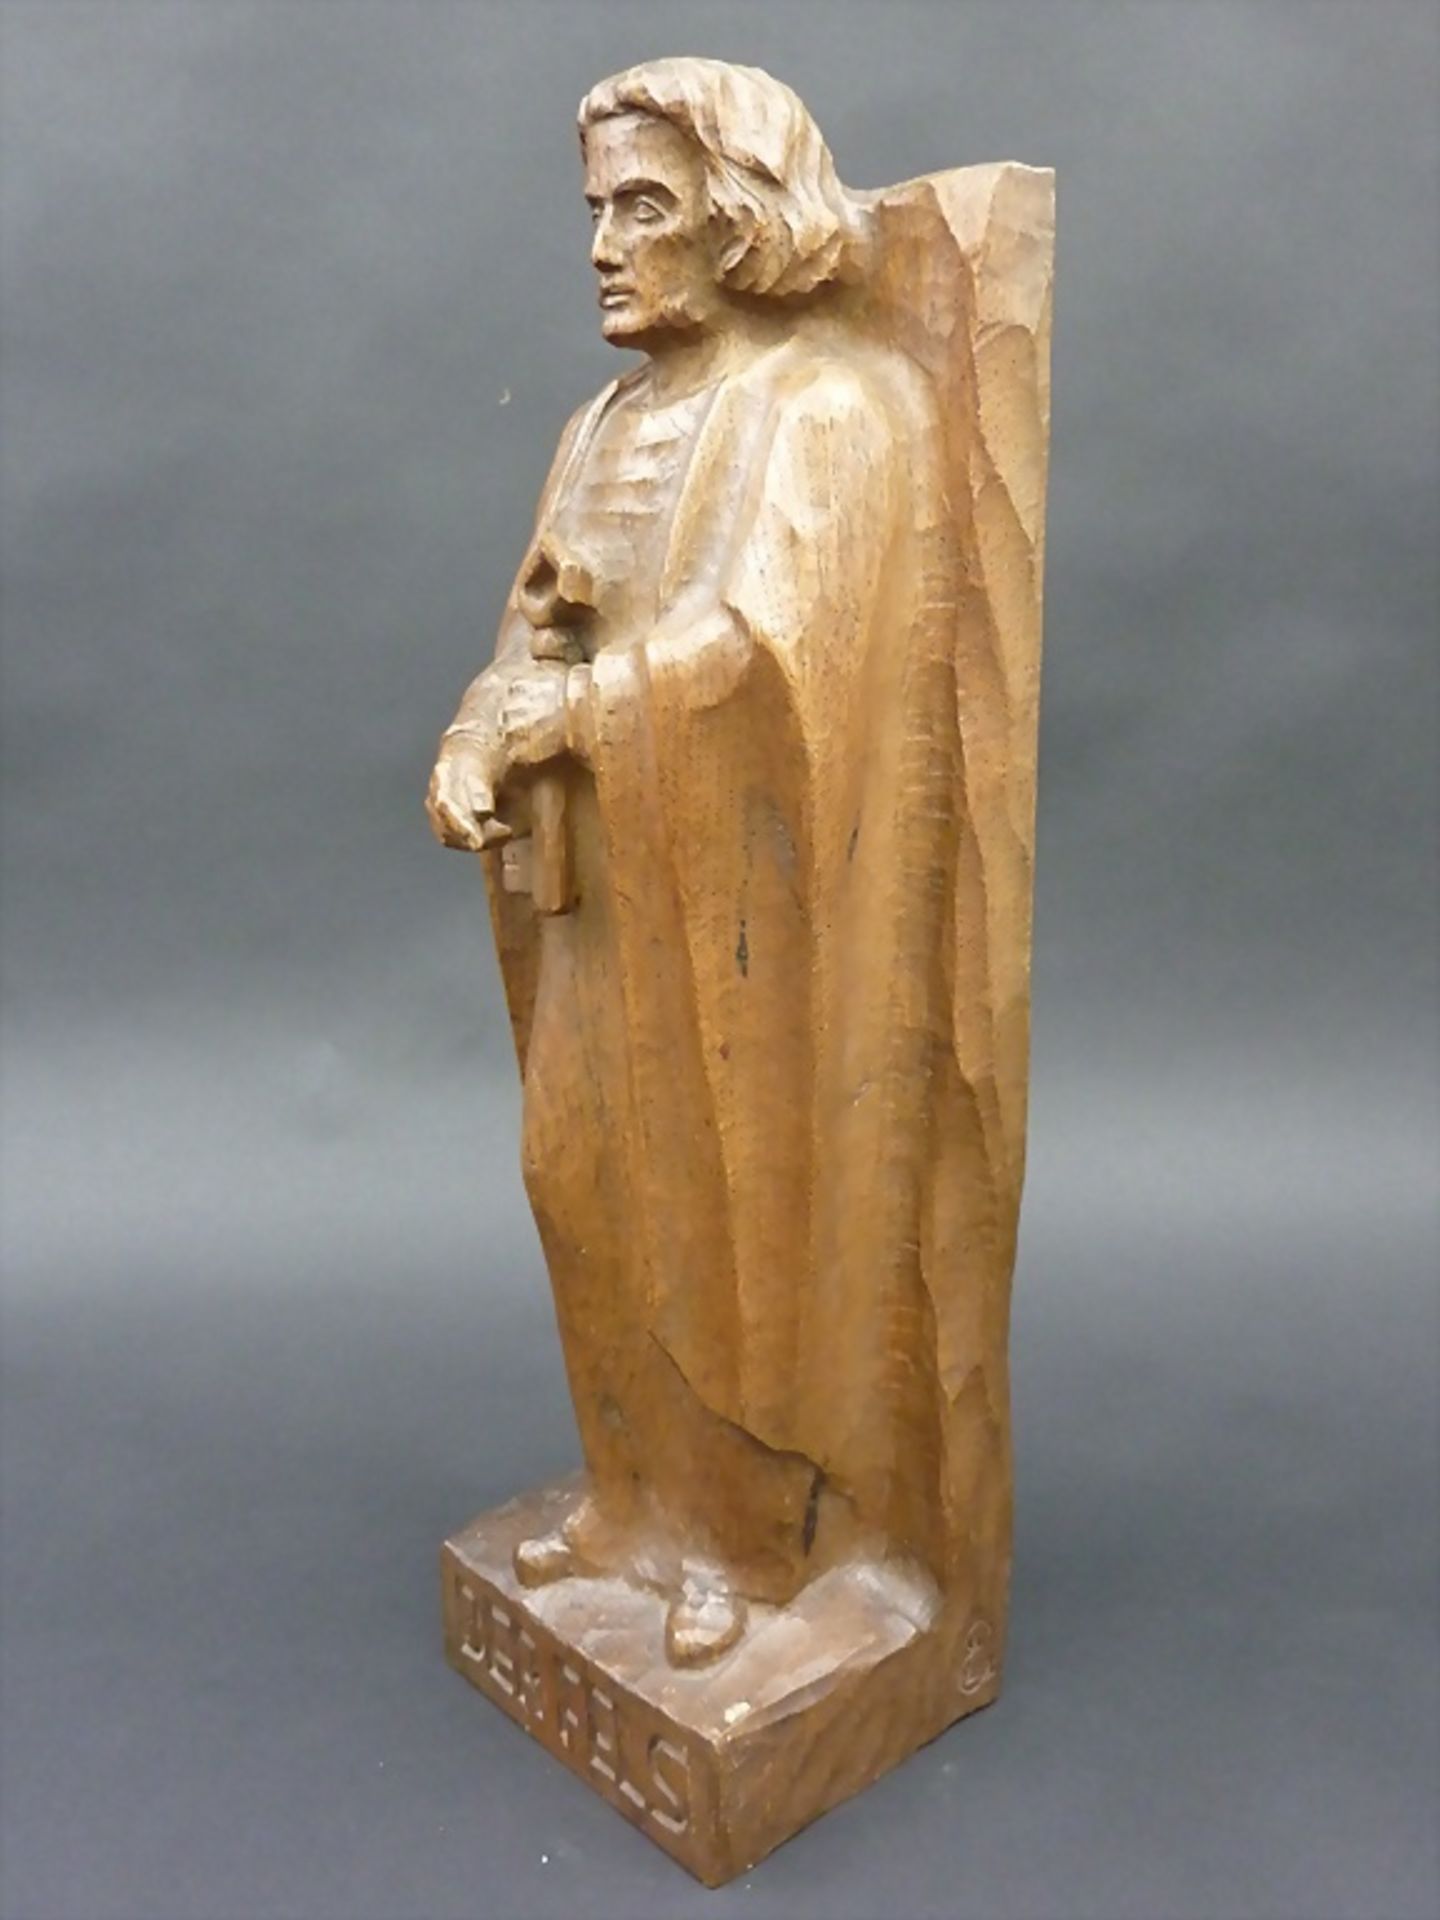 Holz-Skulptur 'Heiliger Apostel Petrus - Der Fels' / Wooden sculpture 'Holy Apostle Peter - ... - Image 3 of 12